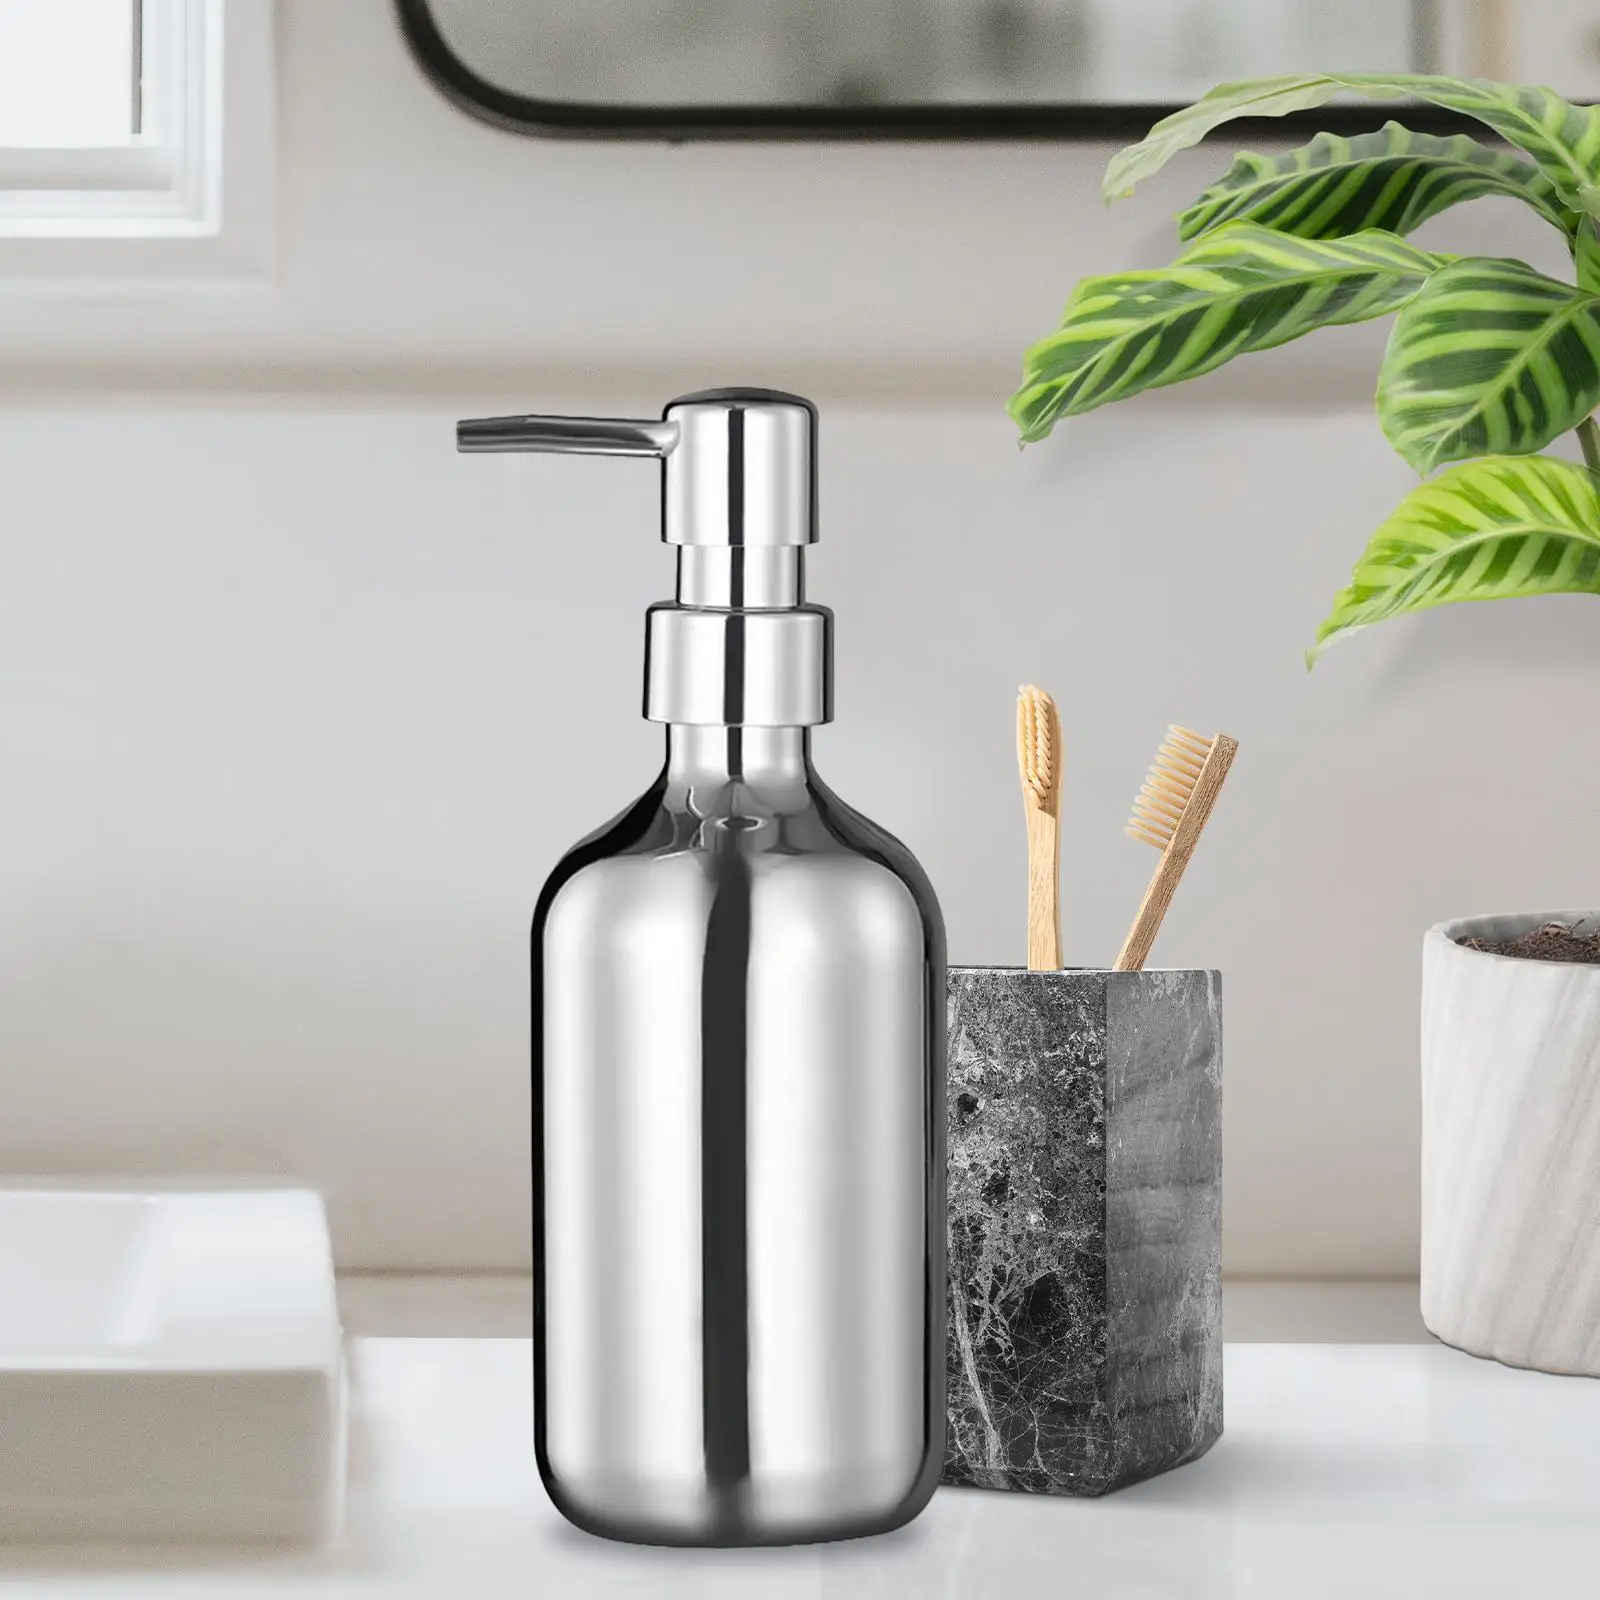 Soap Dispenser, Mirror Pump Unique 500ml Pump Liquid Bottle for Toilets Dining Room Detergents Oils Body Washes